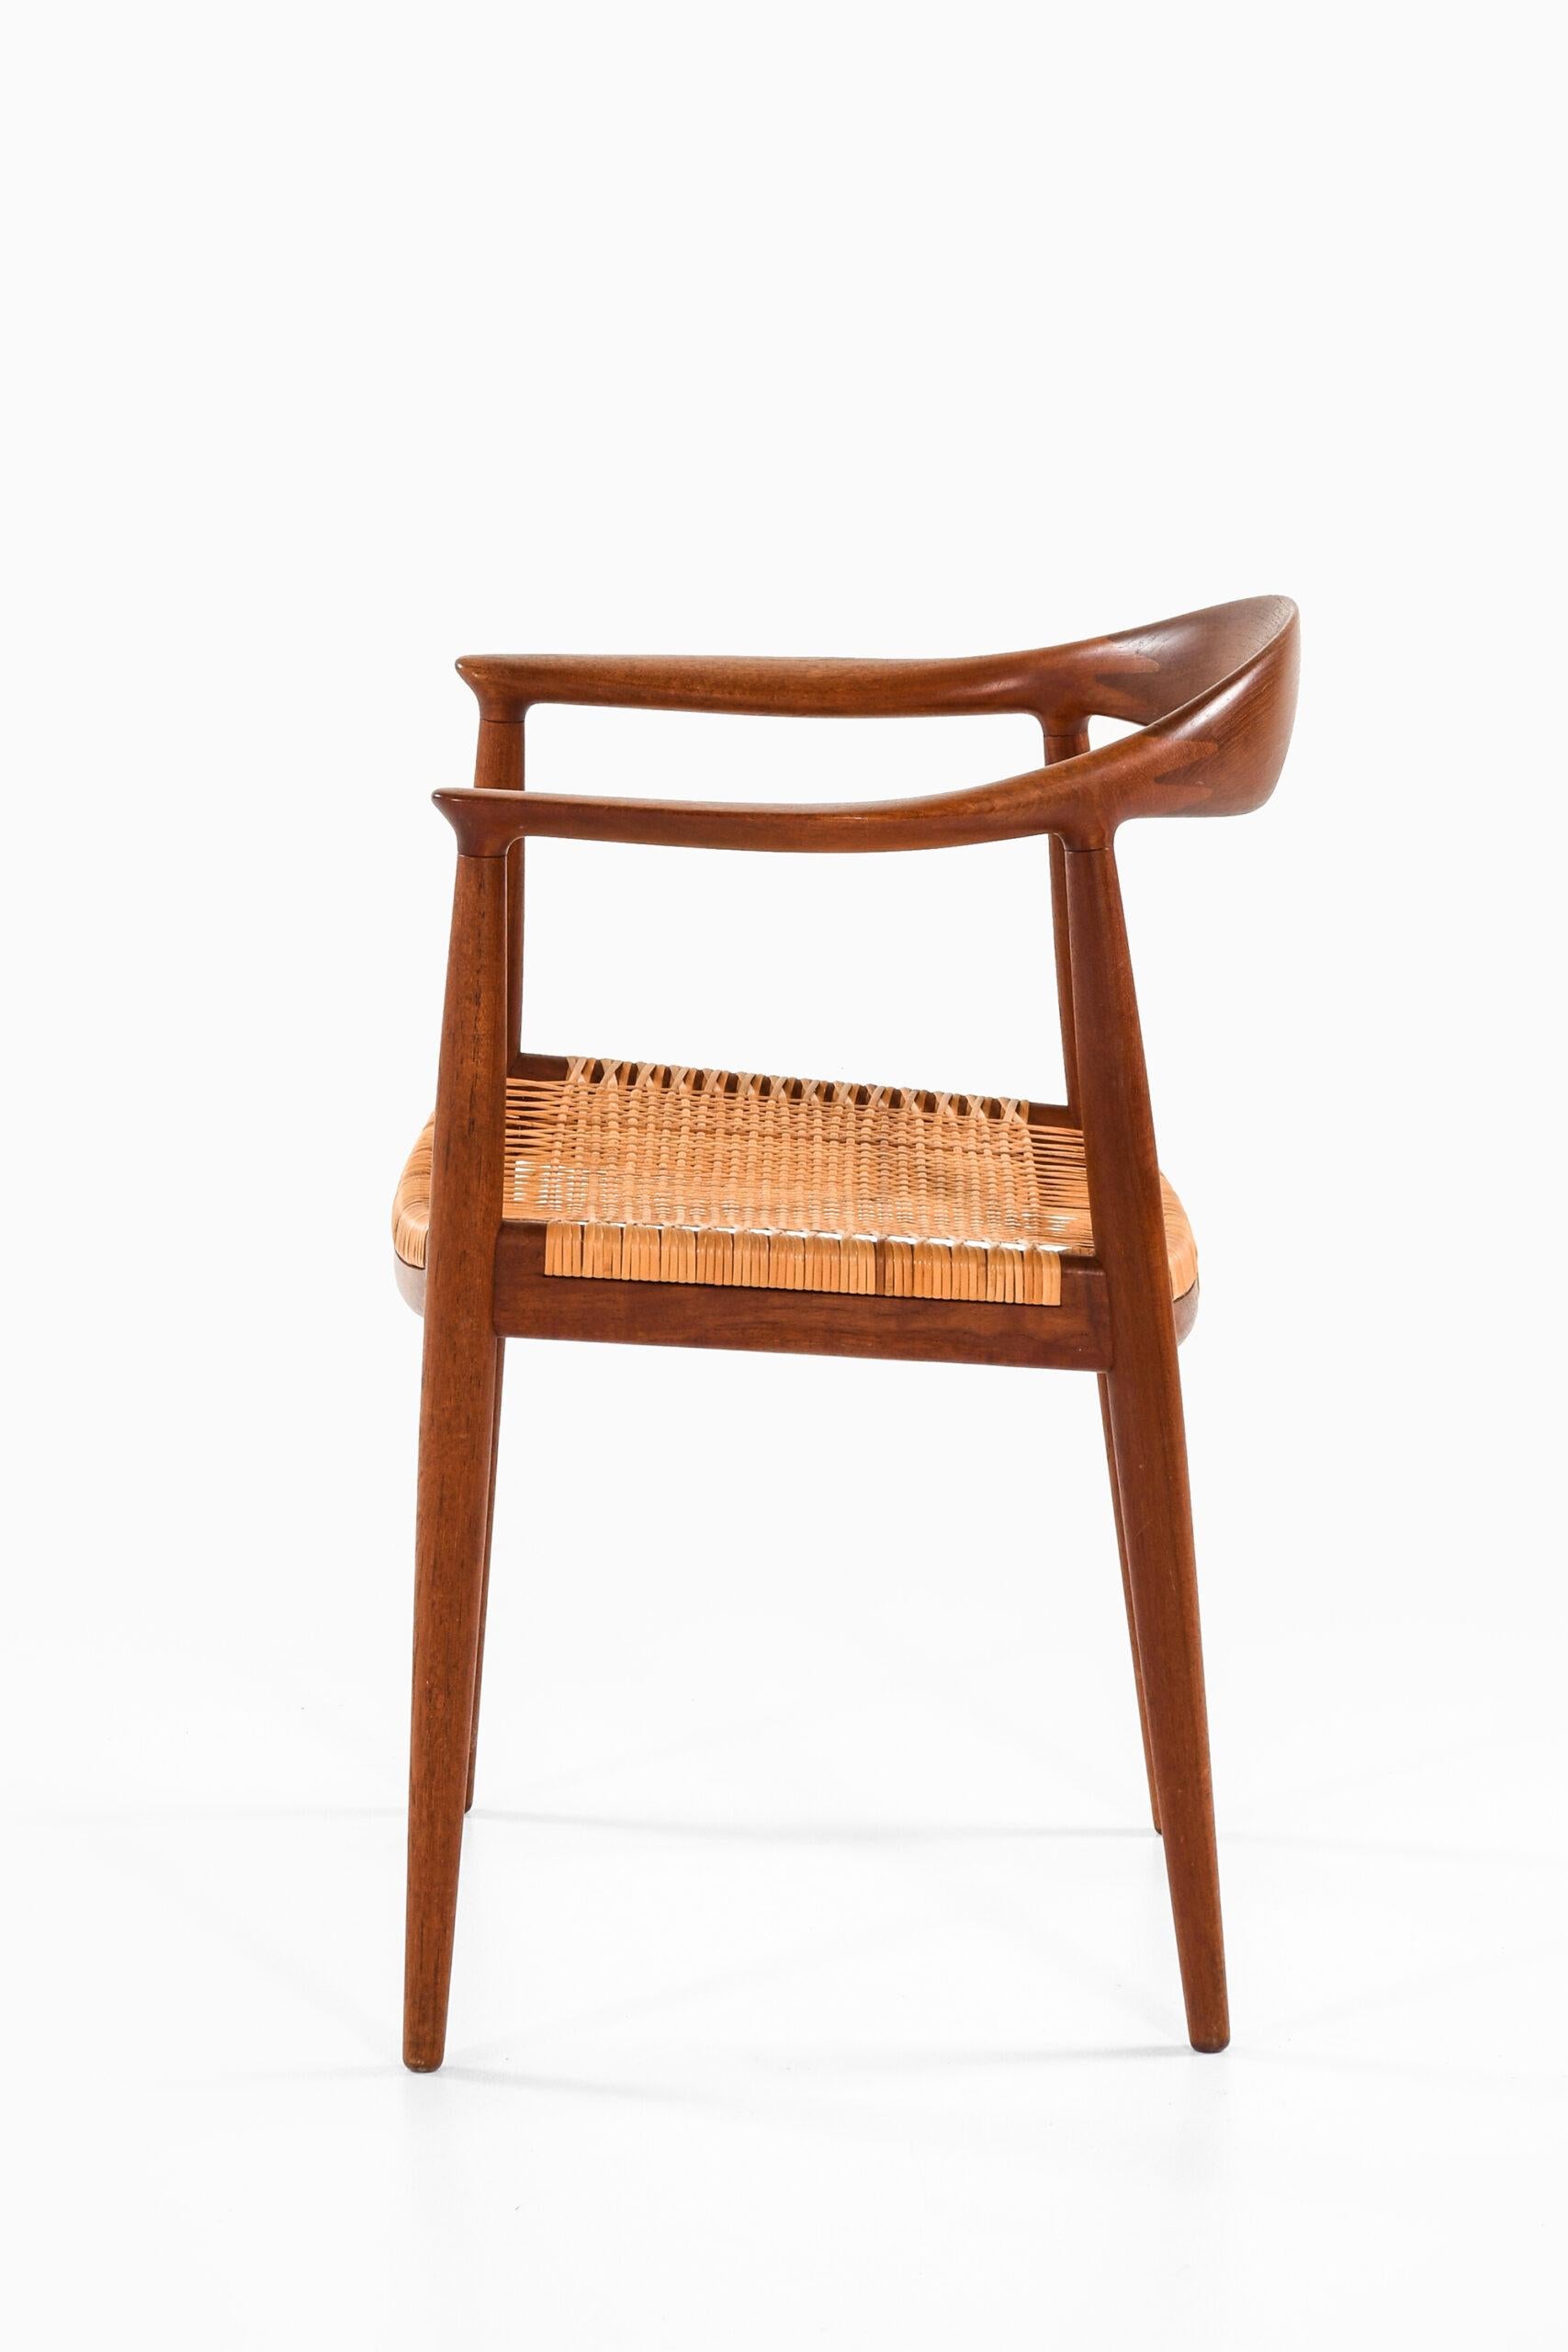 Mid-20th Century Hans Wegner Armchair Model JH-501 / The Chair Produced by Johannes Hansen For Sale